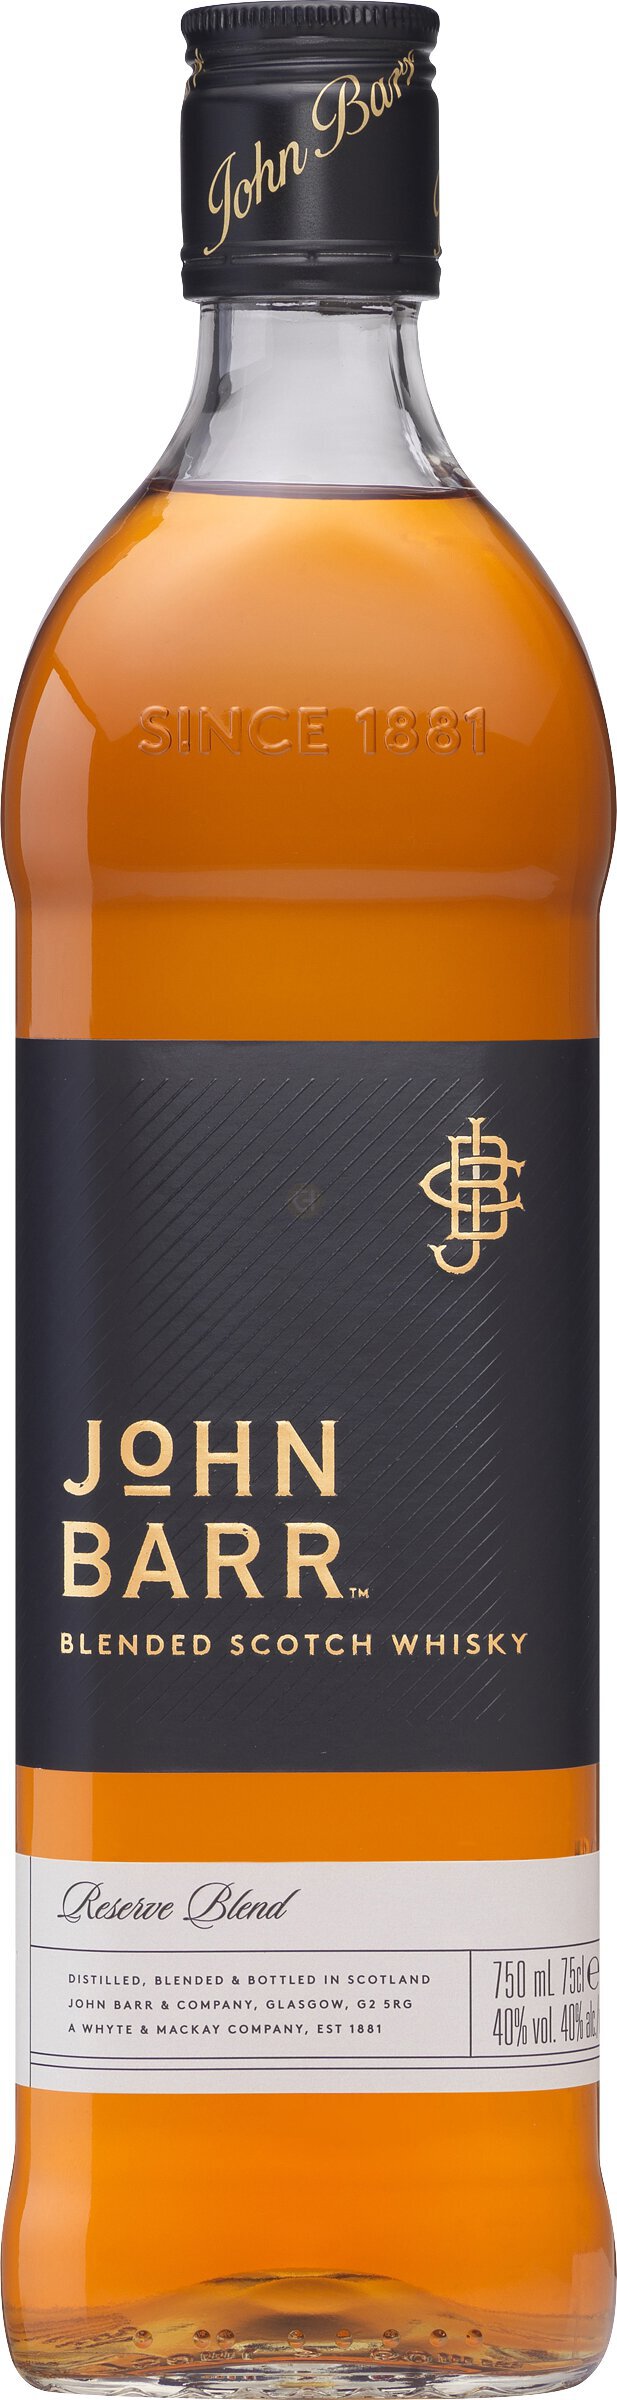 John Barr Blended Scotch Whisky